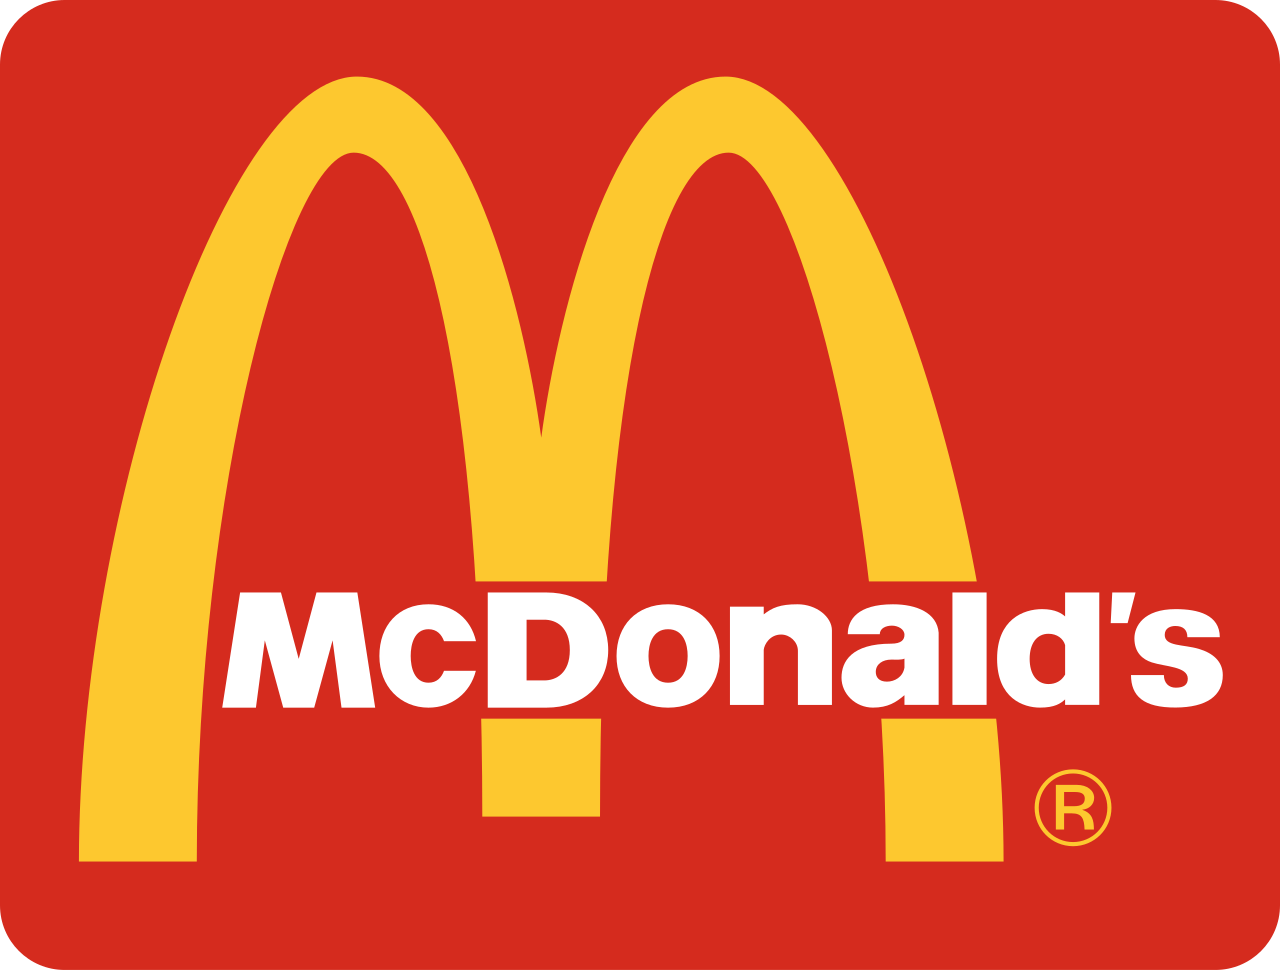 https://upload.wikimedia.org/wikipedia/commons/thumb/4/4b/McDonald%27s_logo.svg/1280px-McDonald%27s_logo.svg.png